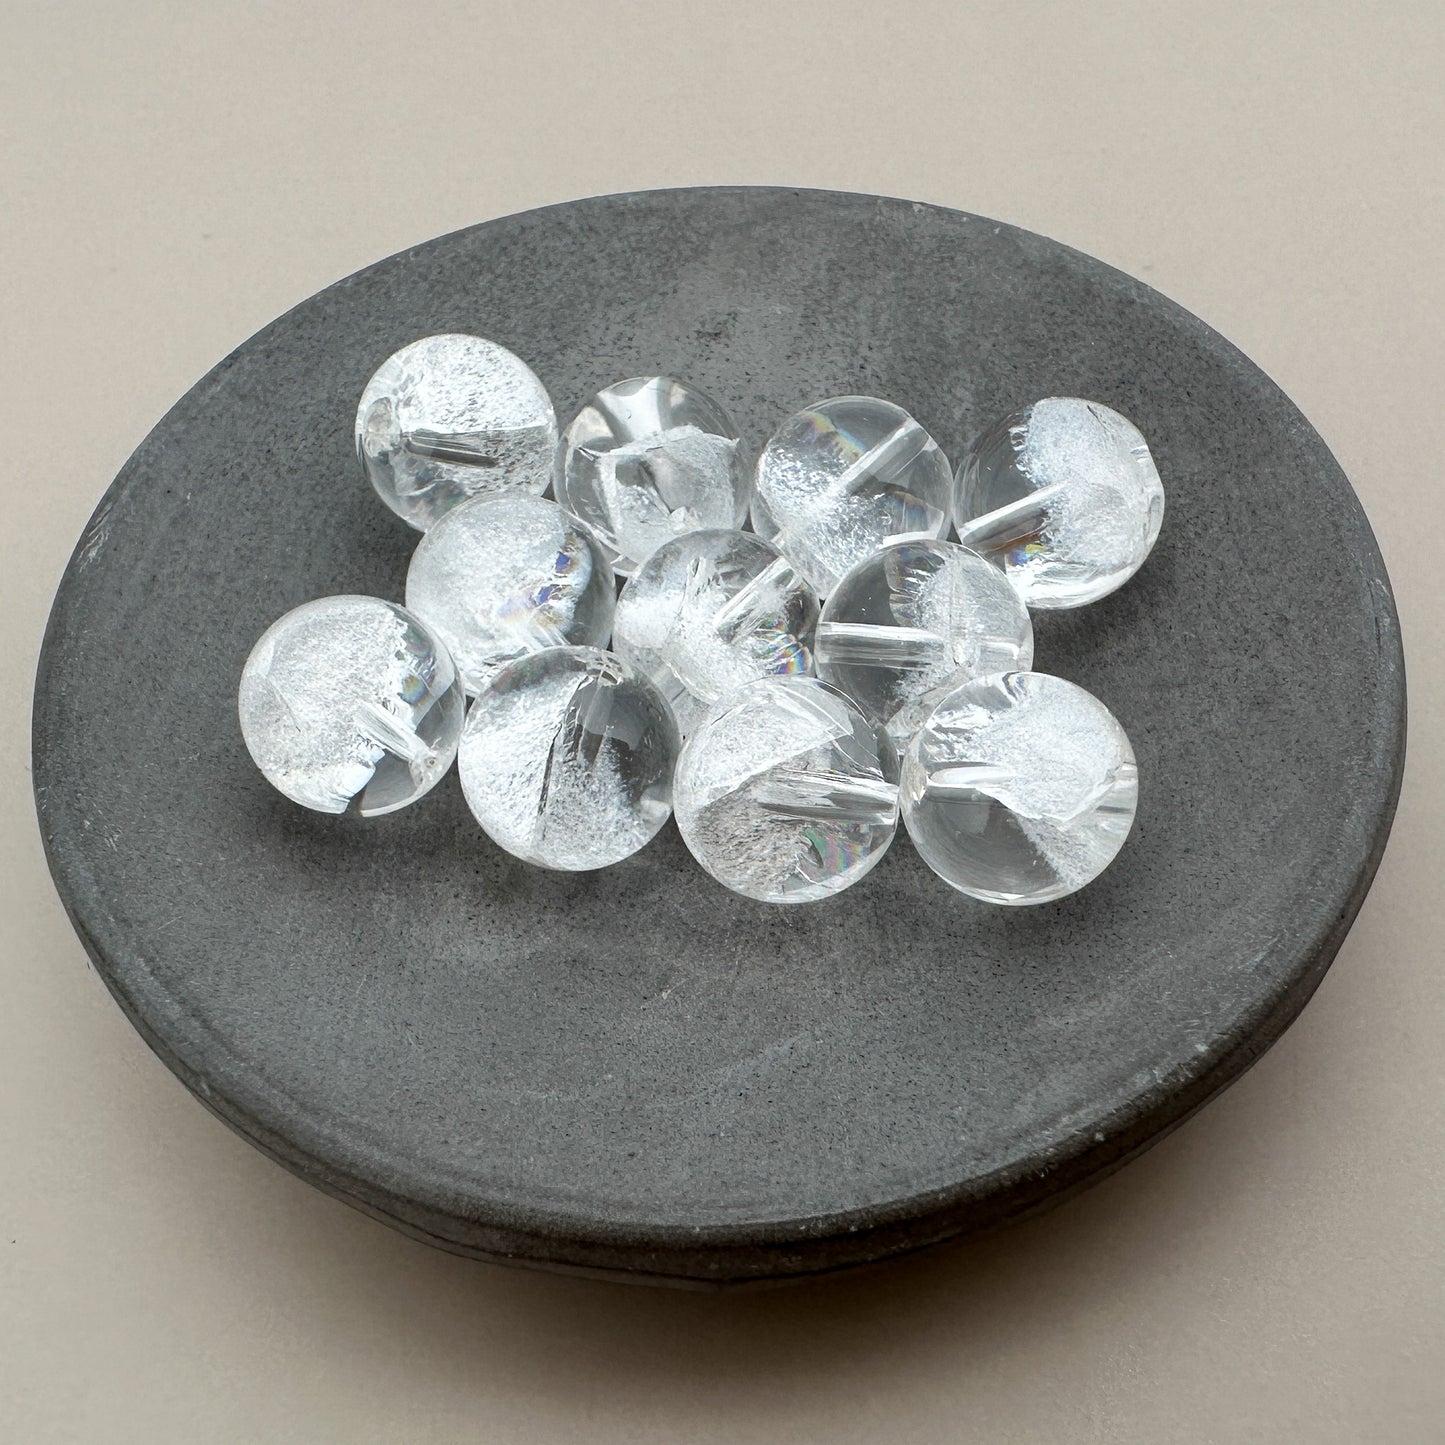 Ice Crystal Quartz 10mm Round Bead - 1 pc. (P3106)